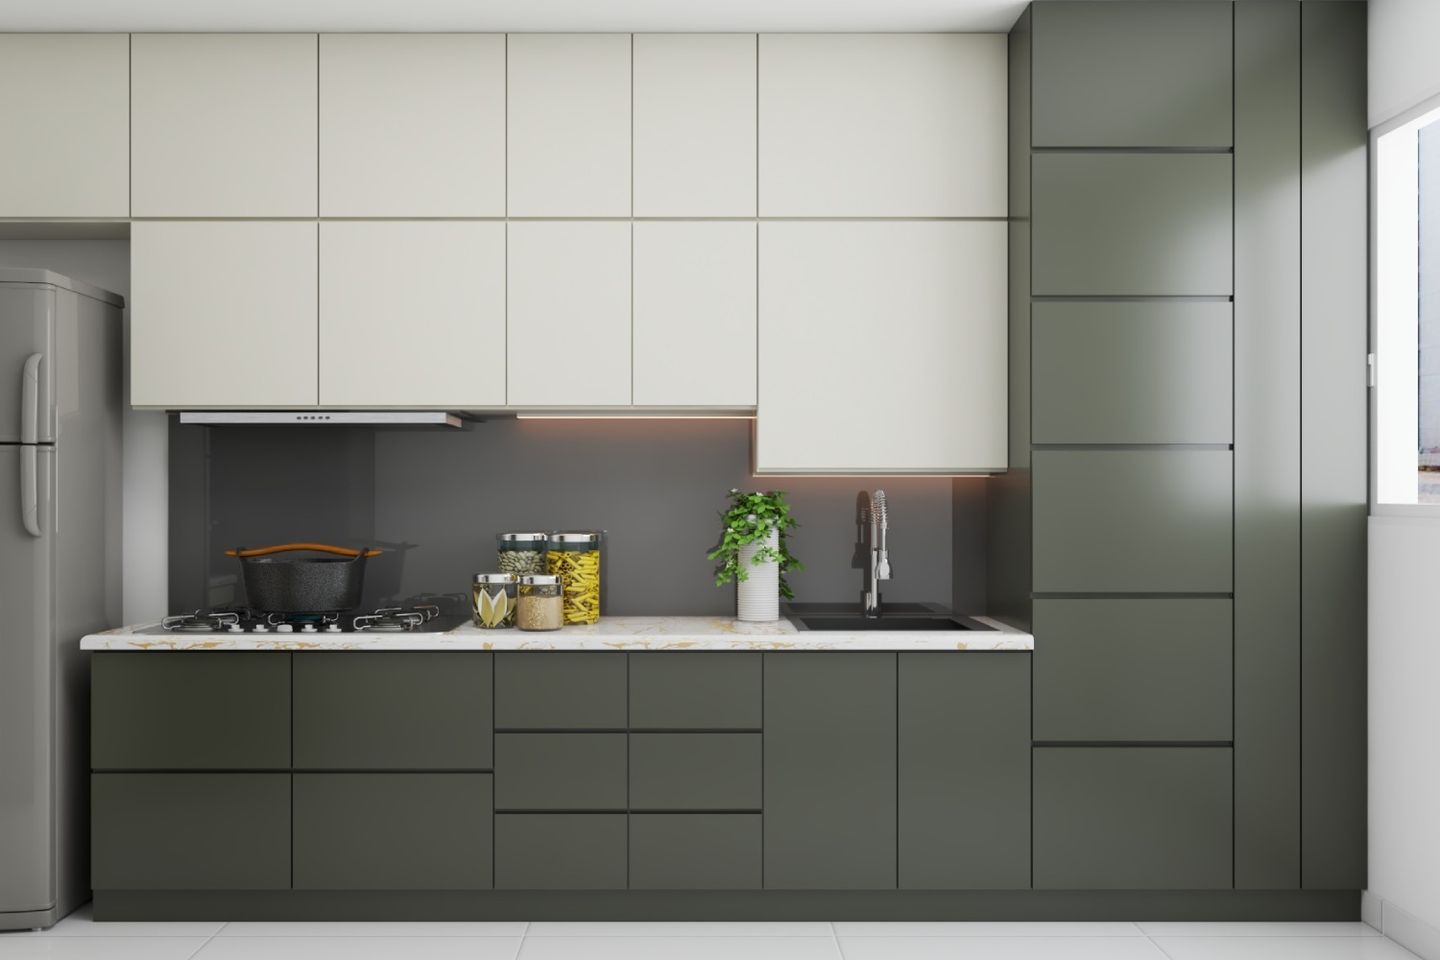 Green And White Laminate Design For Kitchens - Livspace